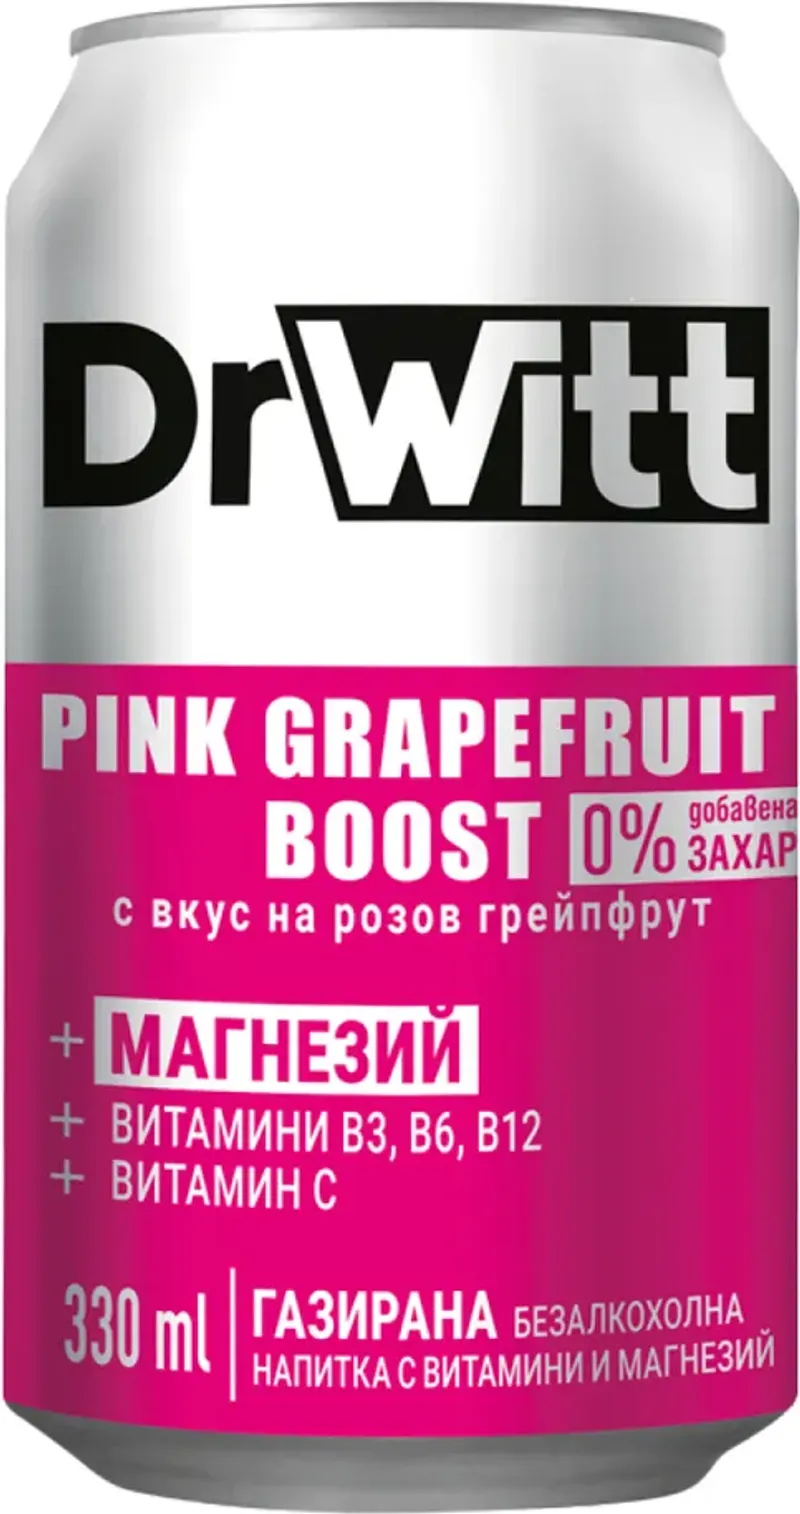 Dr Witt Газирана напитка